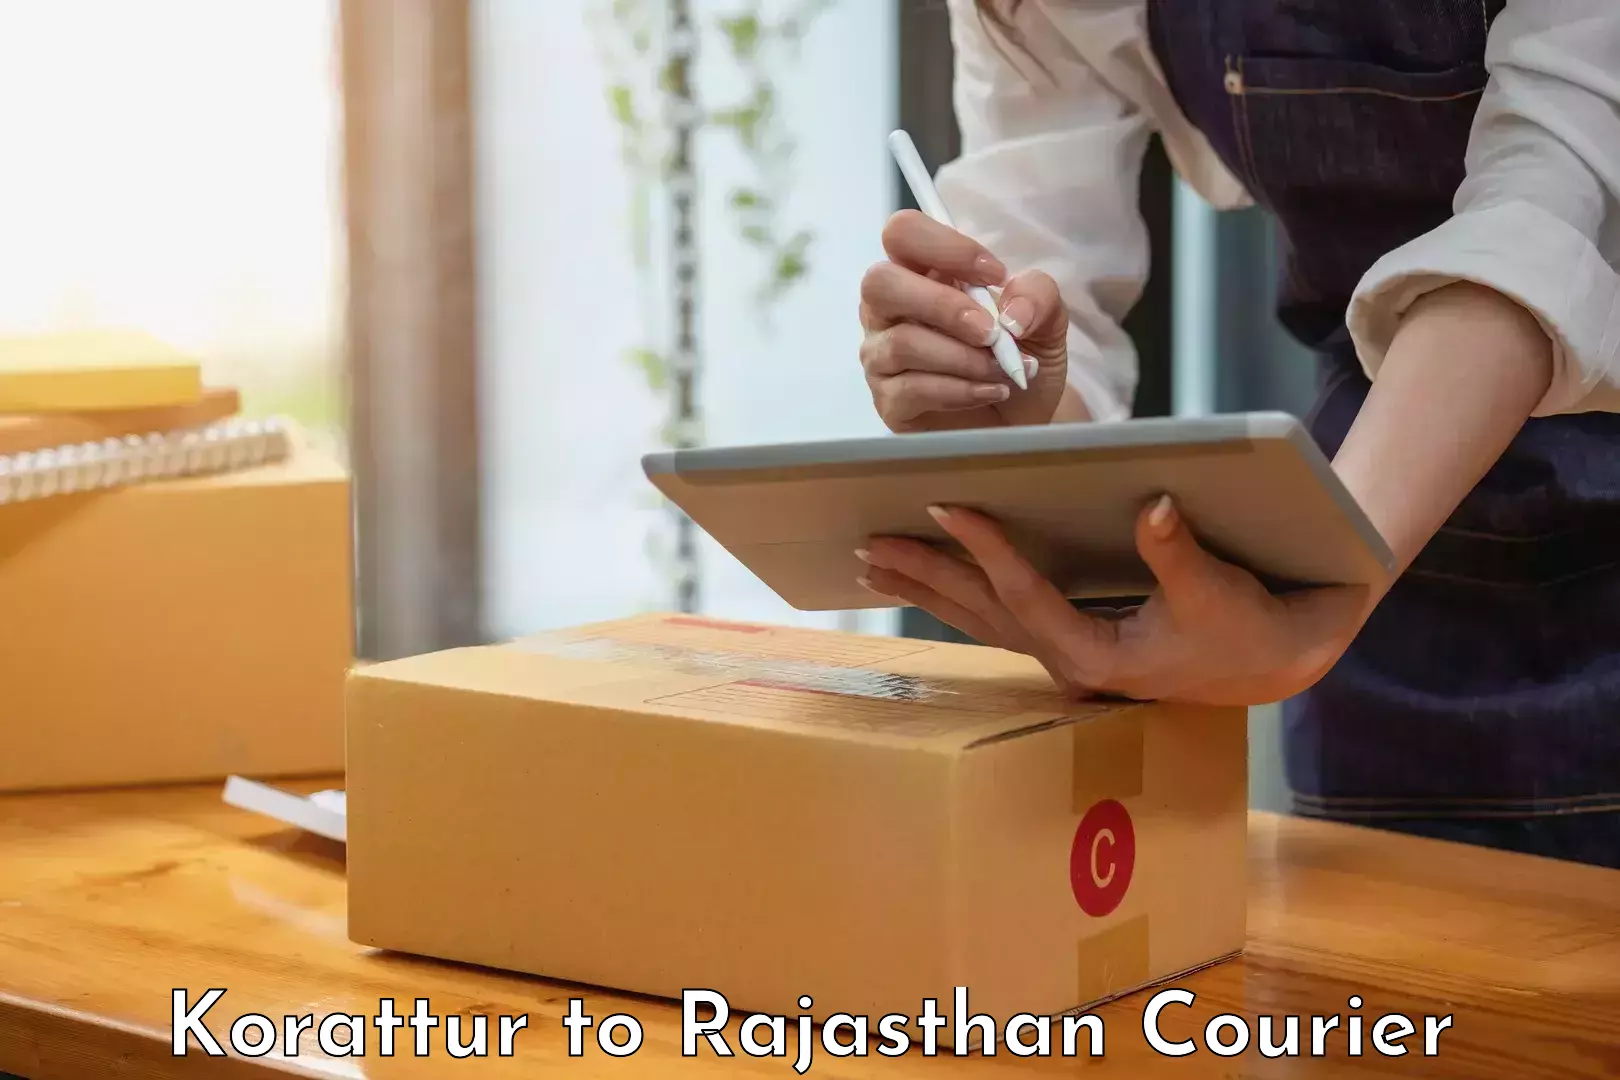 Courier service partnerships Korattur to Rajgarh Rajasthan